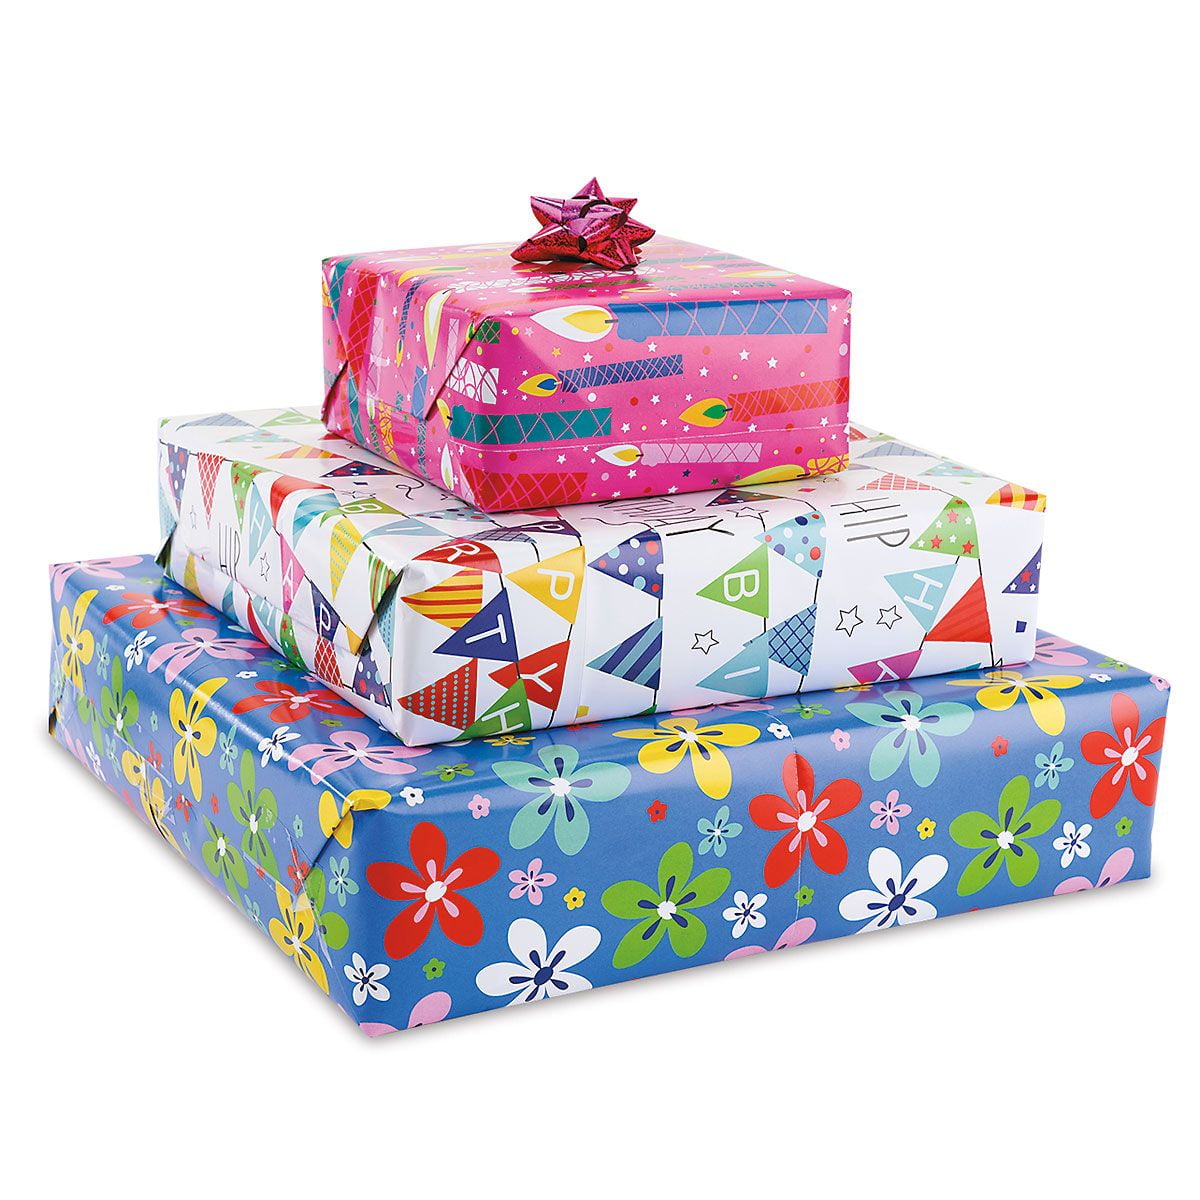 Jillson & Roberts Bulk Ream Roll Kids Birthday Gift Wrap Wrapping Paper, Space Gravity Full Ream 833 ft x 30 in